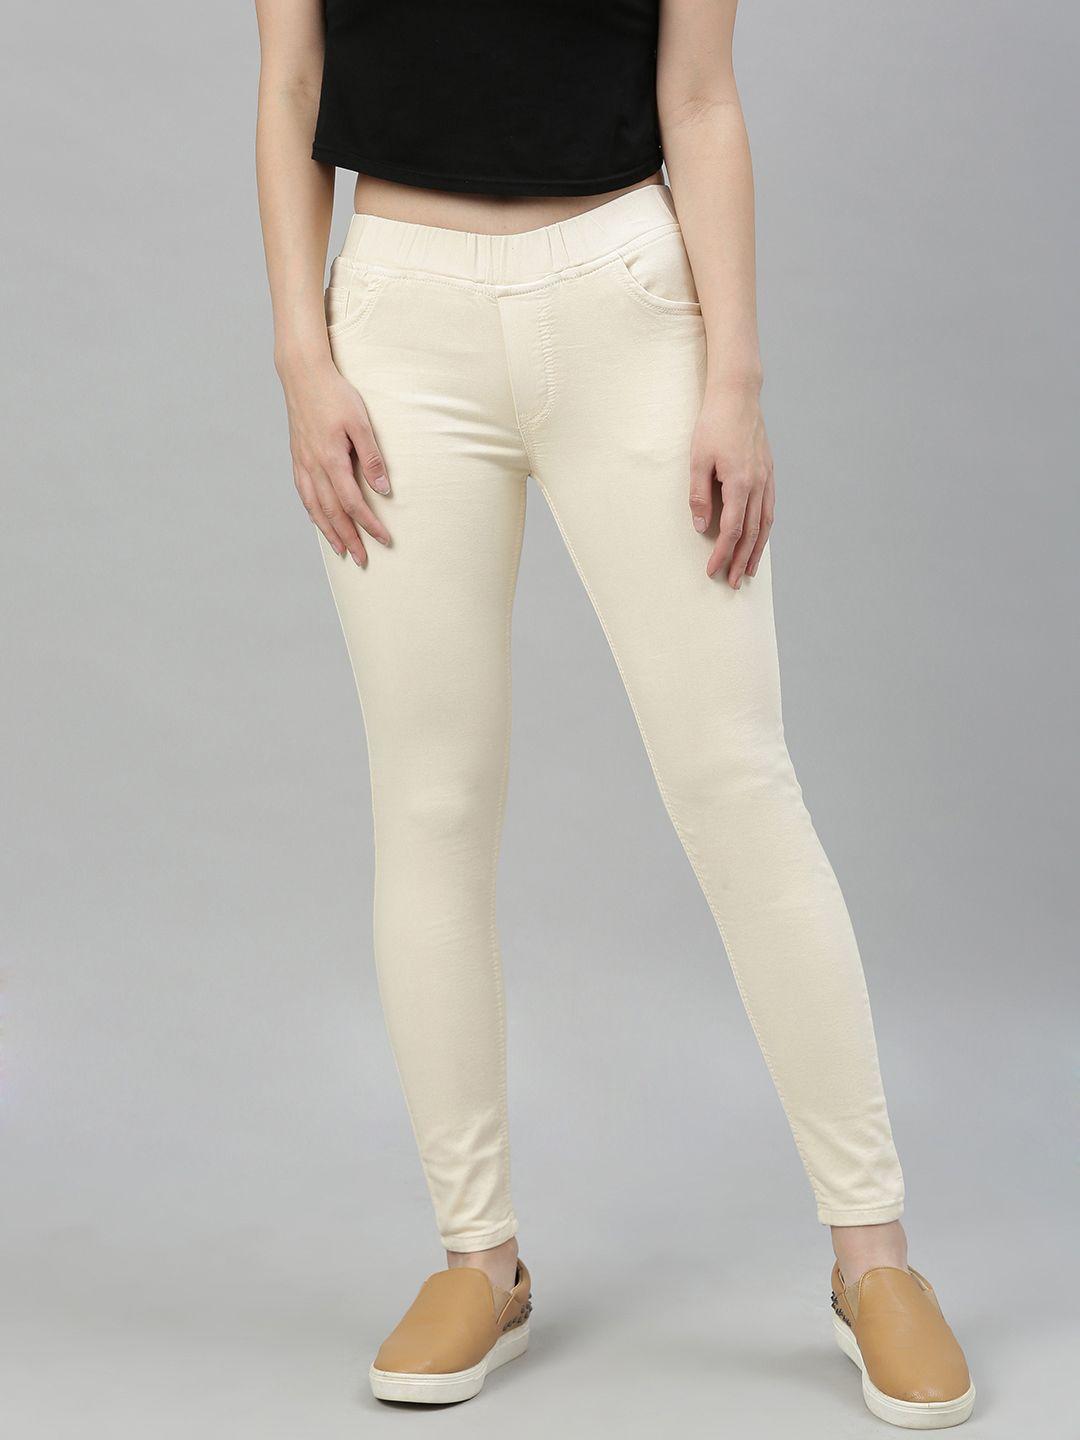 adbucks-women's-beige-solid-denim-lycra-jeggings-with-5-pocket-&-elasticated-waistband